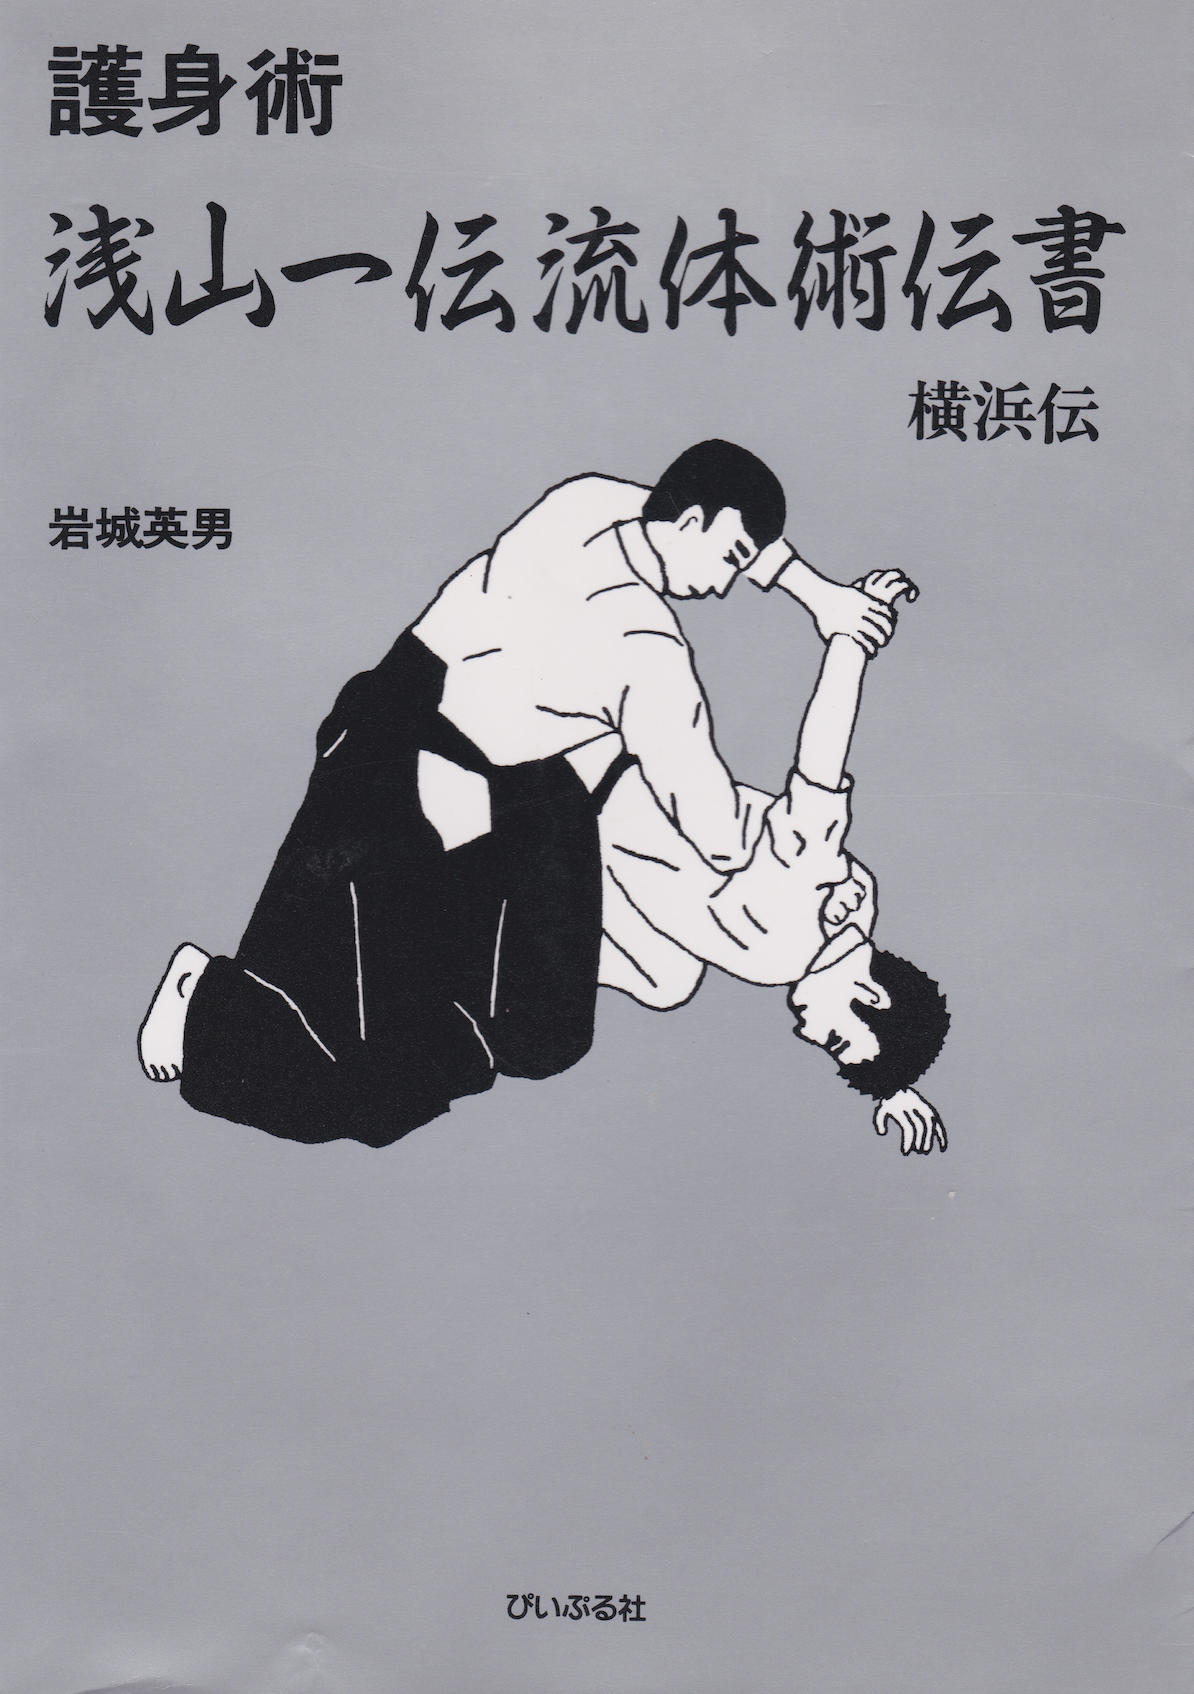 Asayama Ichiden Ryu Self Defense Book by Hideo Iwaki (Preowned)